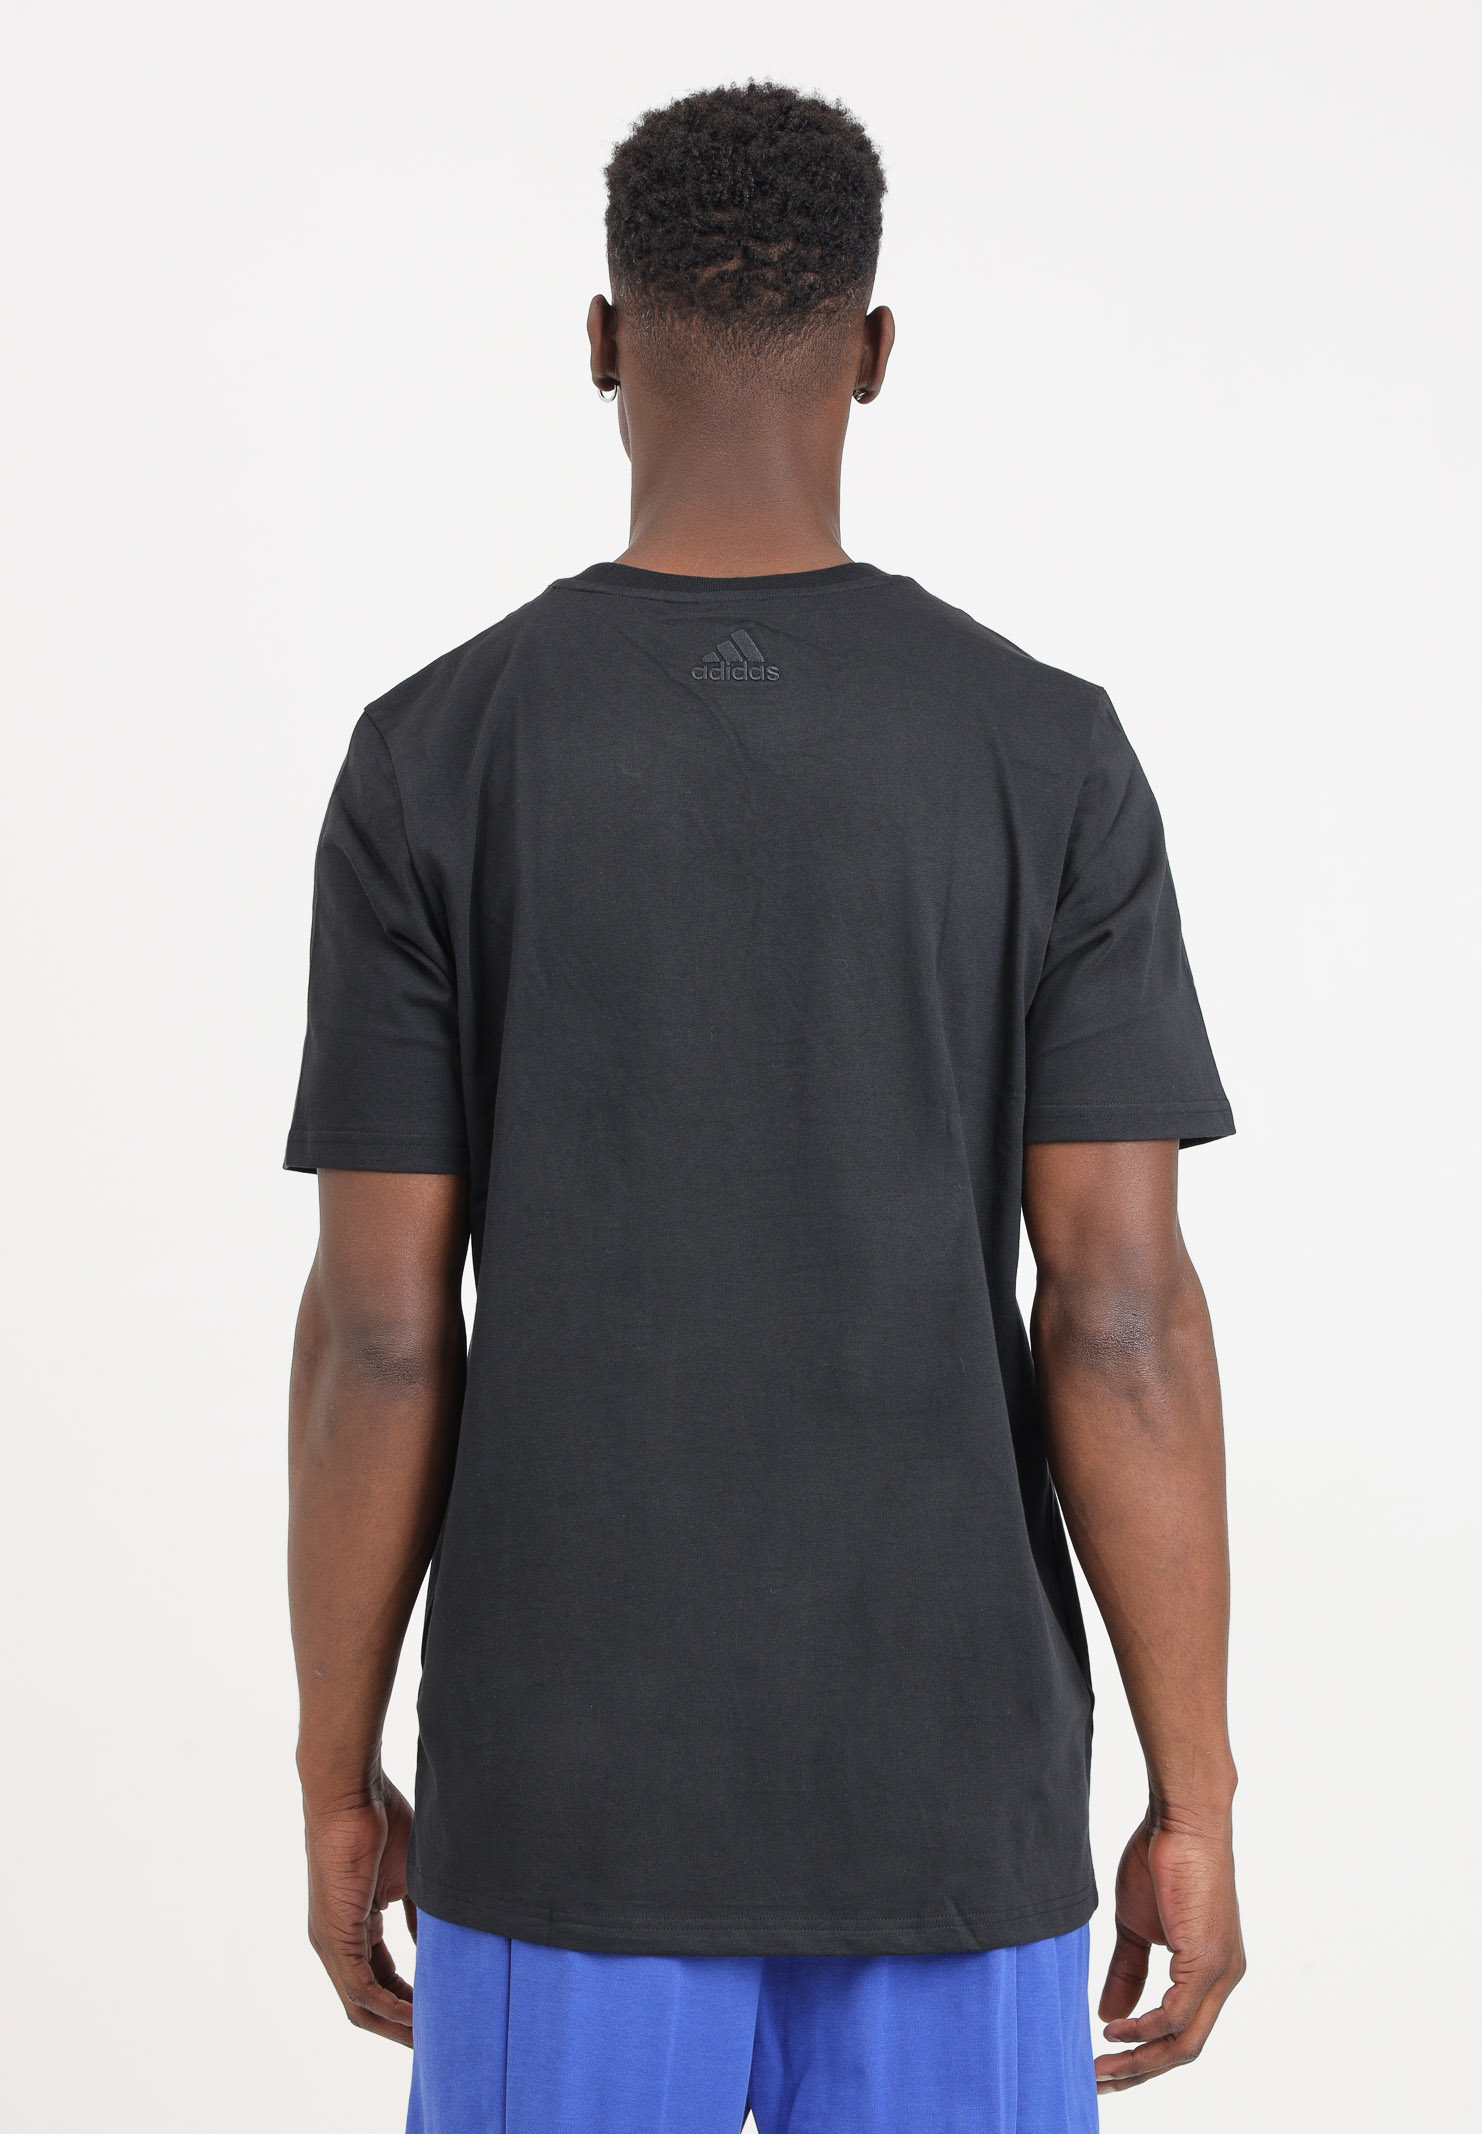 Essentials Single Jersey Big Logo men\'s black t-shirt model - ADIDAS  PERFORMANCE - Pavidas